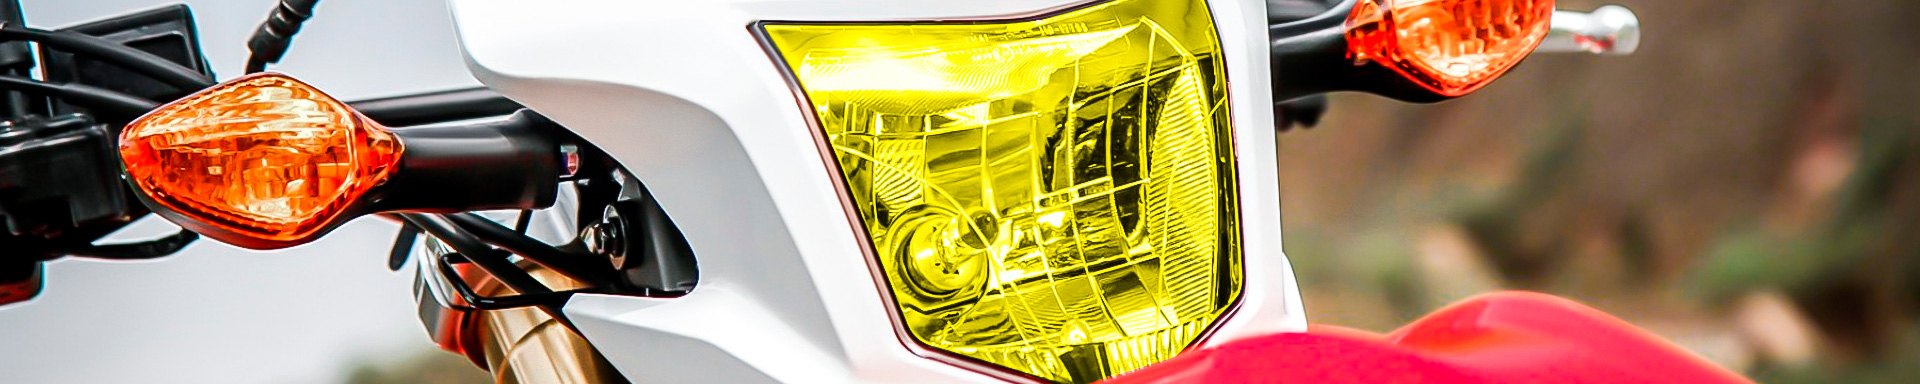 Universal Motorcycle Light Lenses